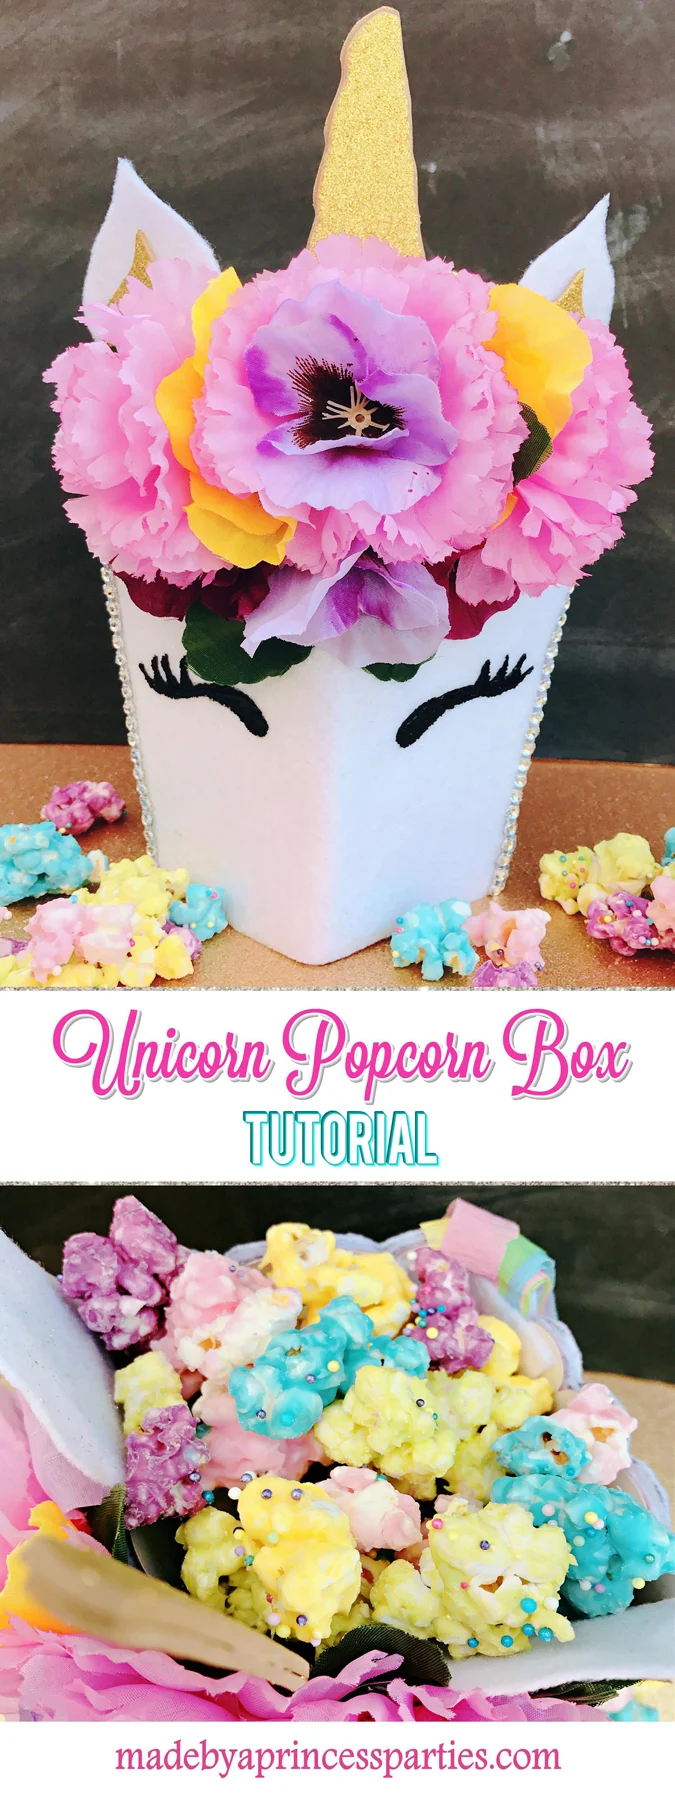 Unicorn Popcorn Box Tutorial Pin it for later @madebyaprincess #popcornboxparty2017